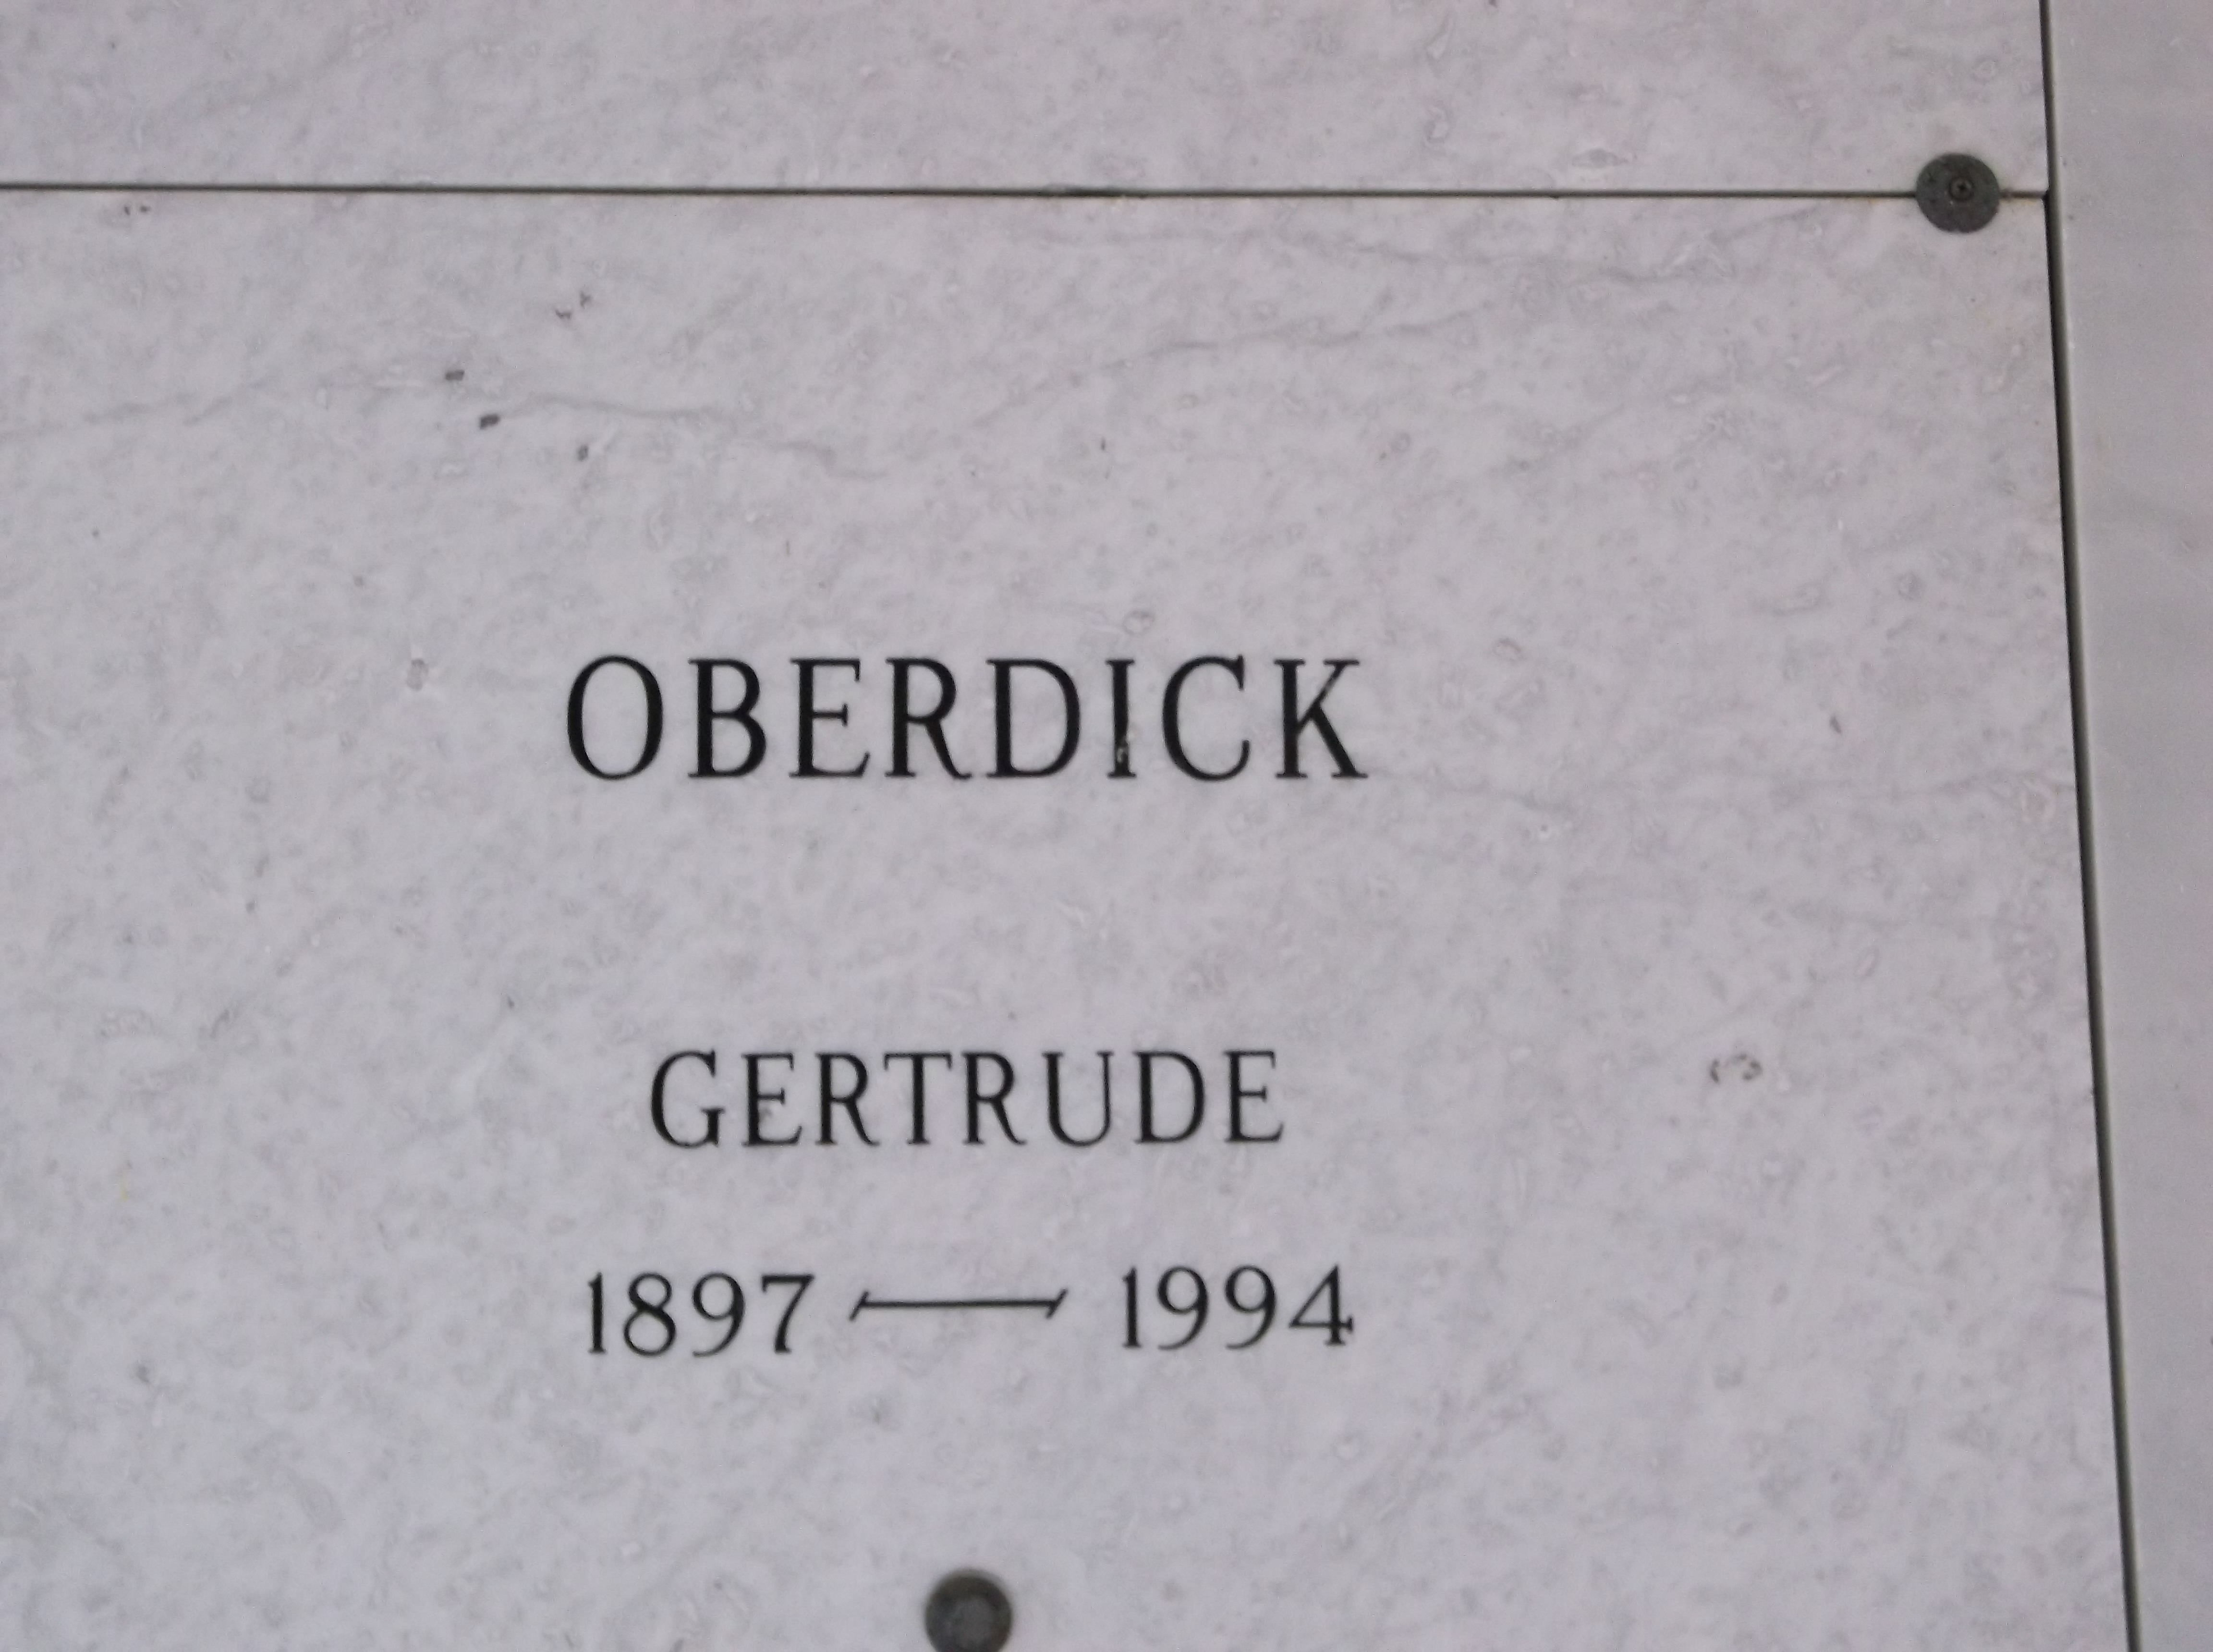 Gertrude Oberdick